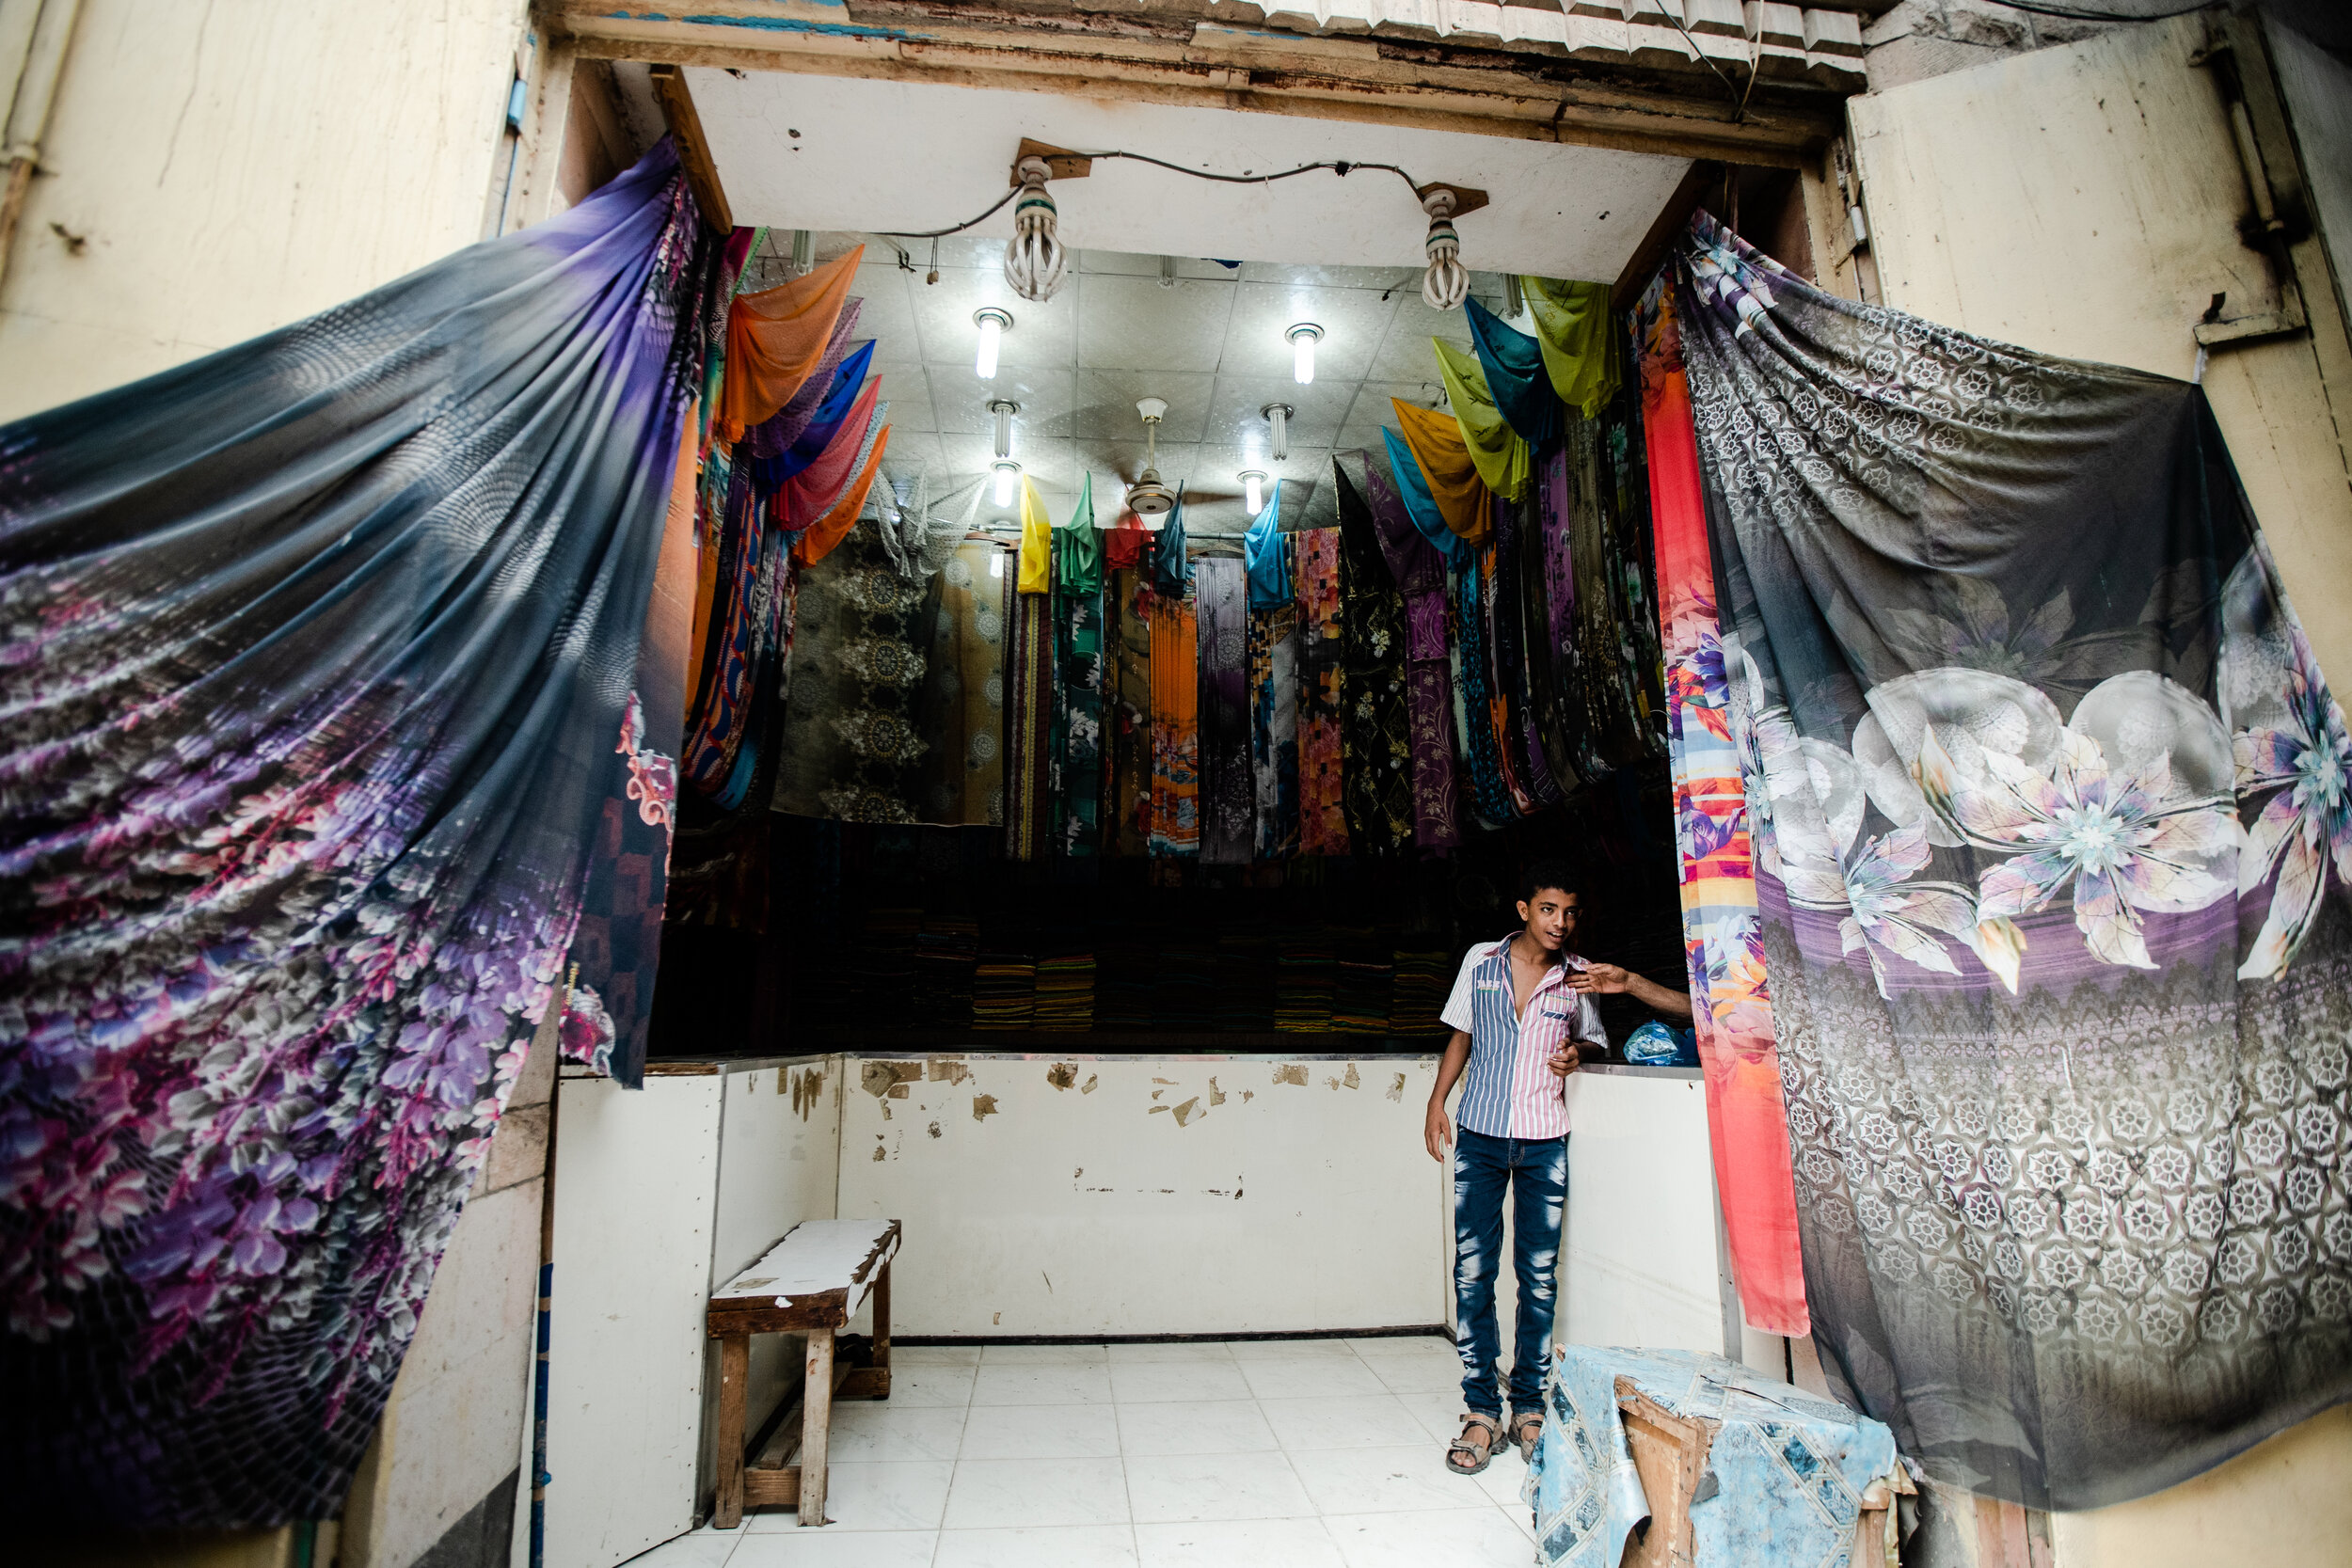  a Yemeni shop in Rue des Mouches in Djibouti city, the capital of Djibouti. 2019 